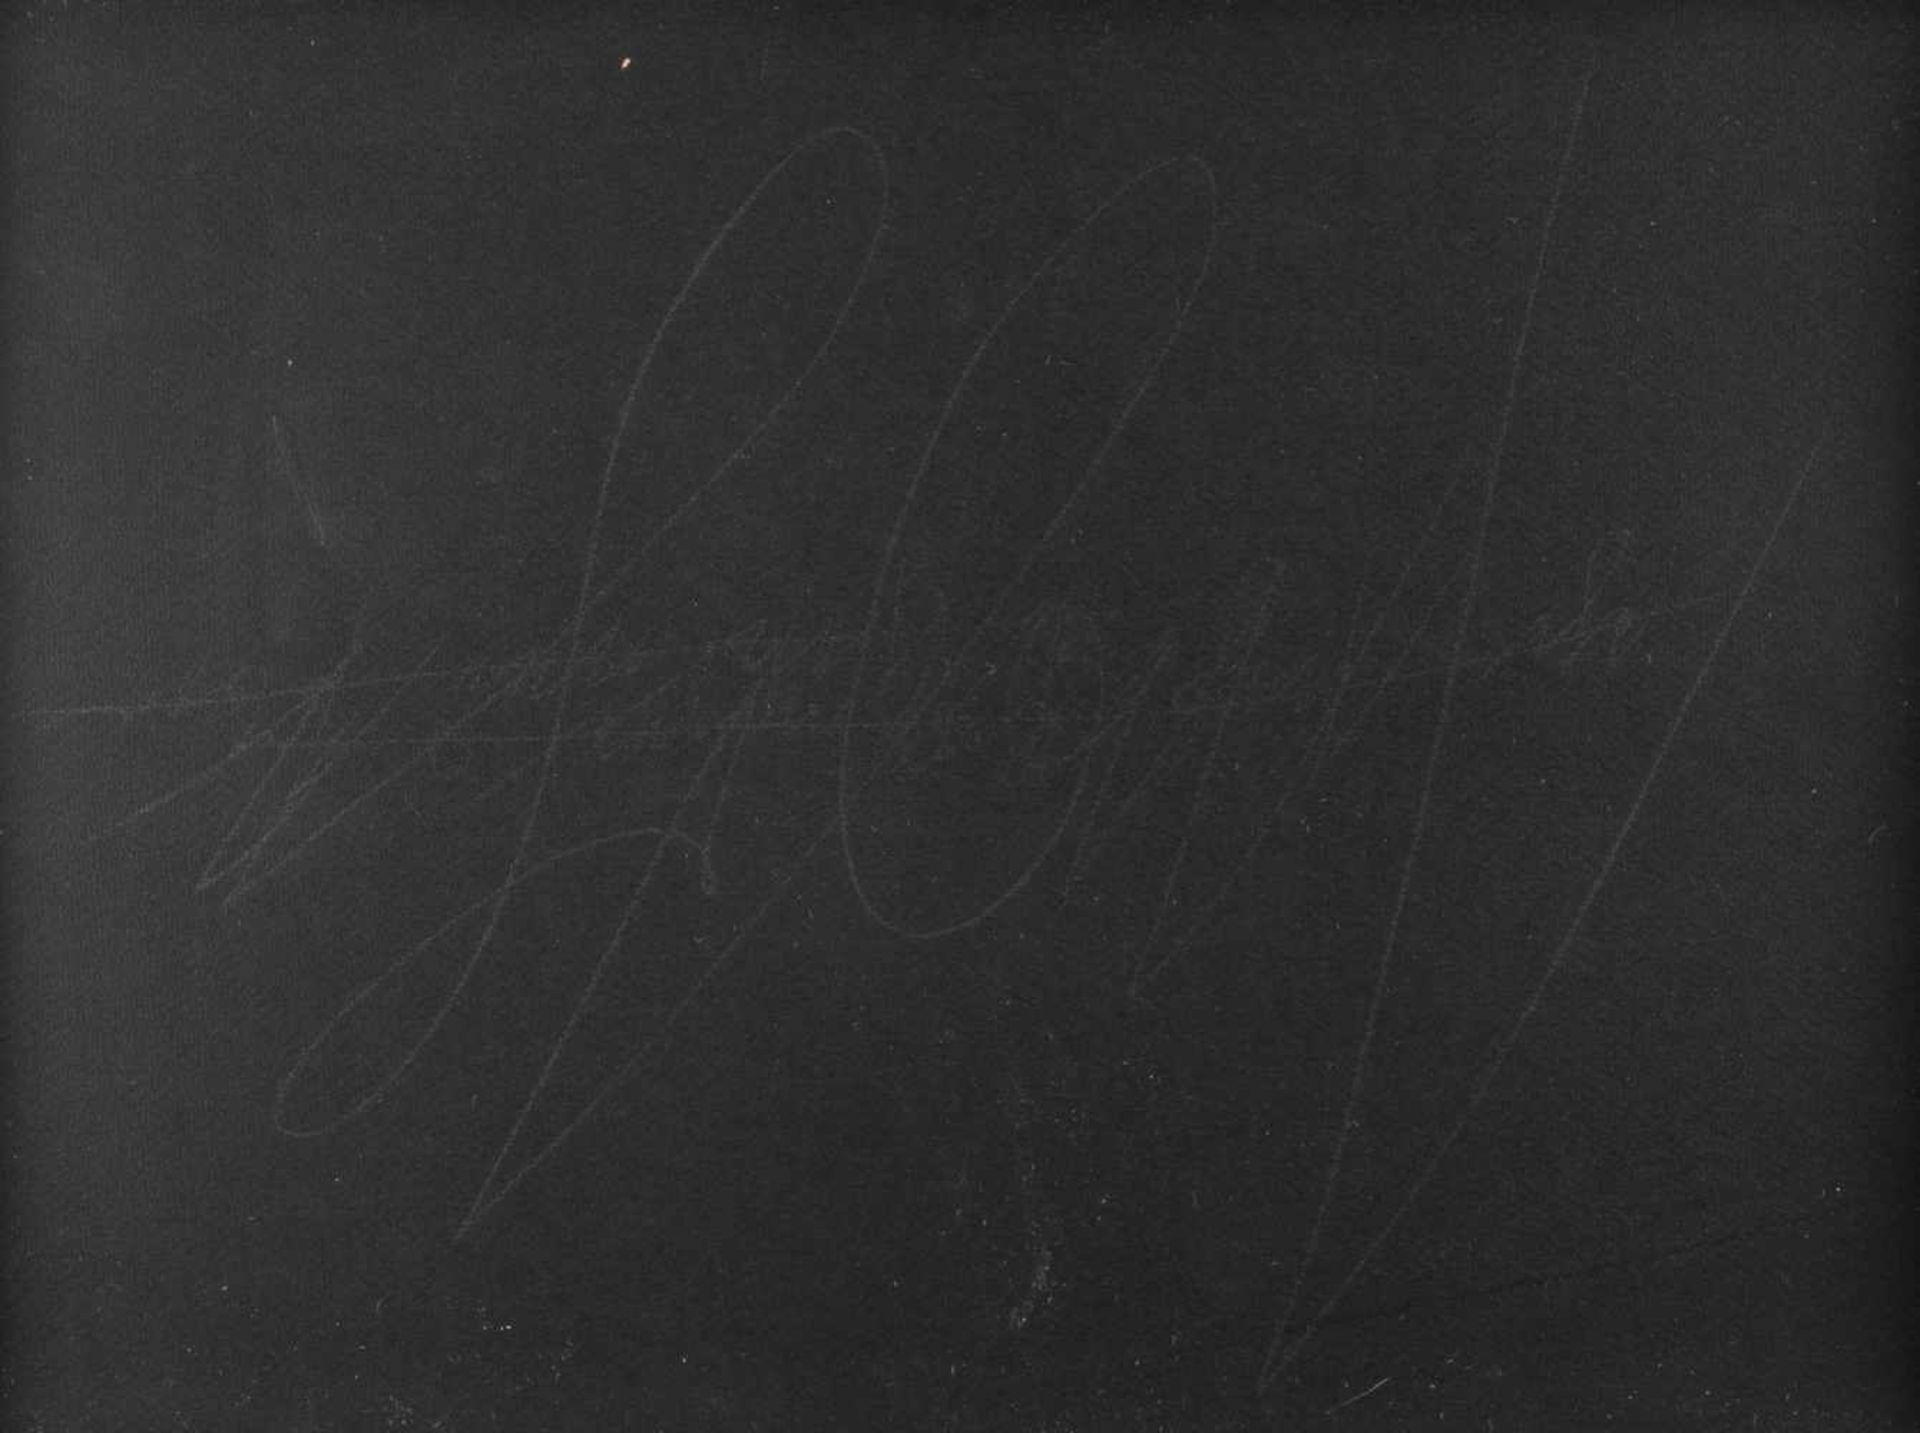 JOSEPH BEUYS UND JAMES LEE BYARS1921-1986 bzw. 1932-1997FRAMMENTI VENIZIANI (I-V) Jeweils - Image 4 of 5